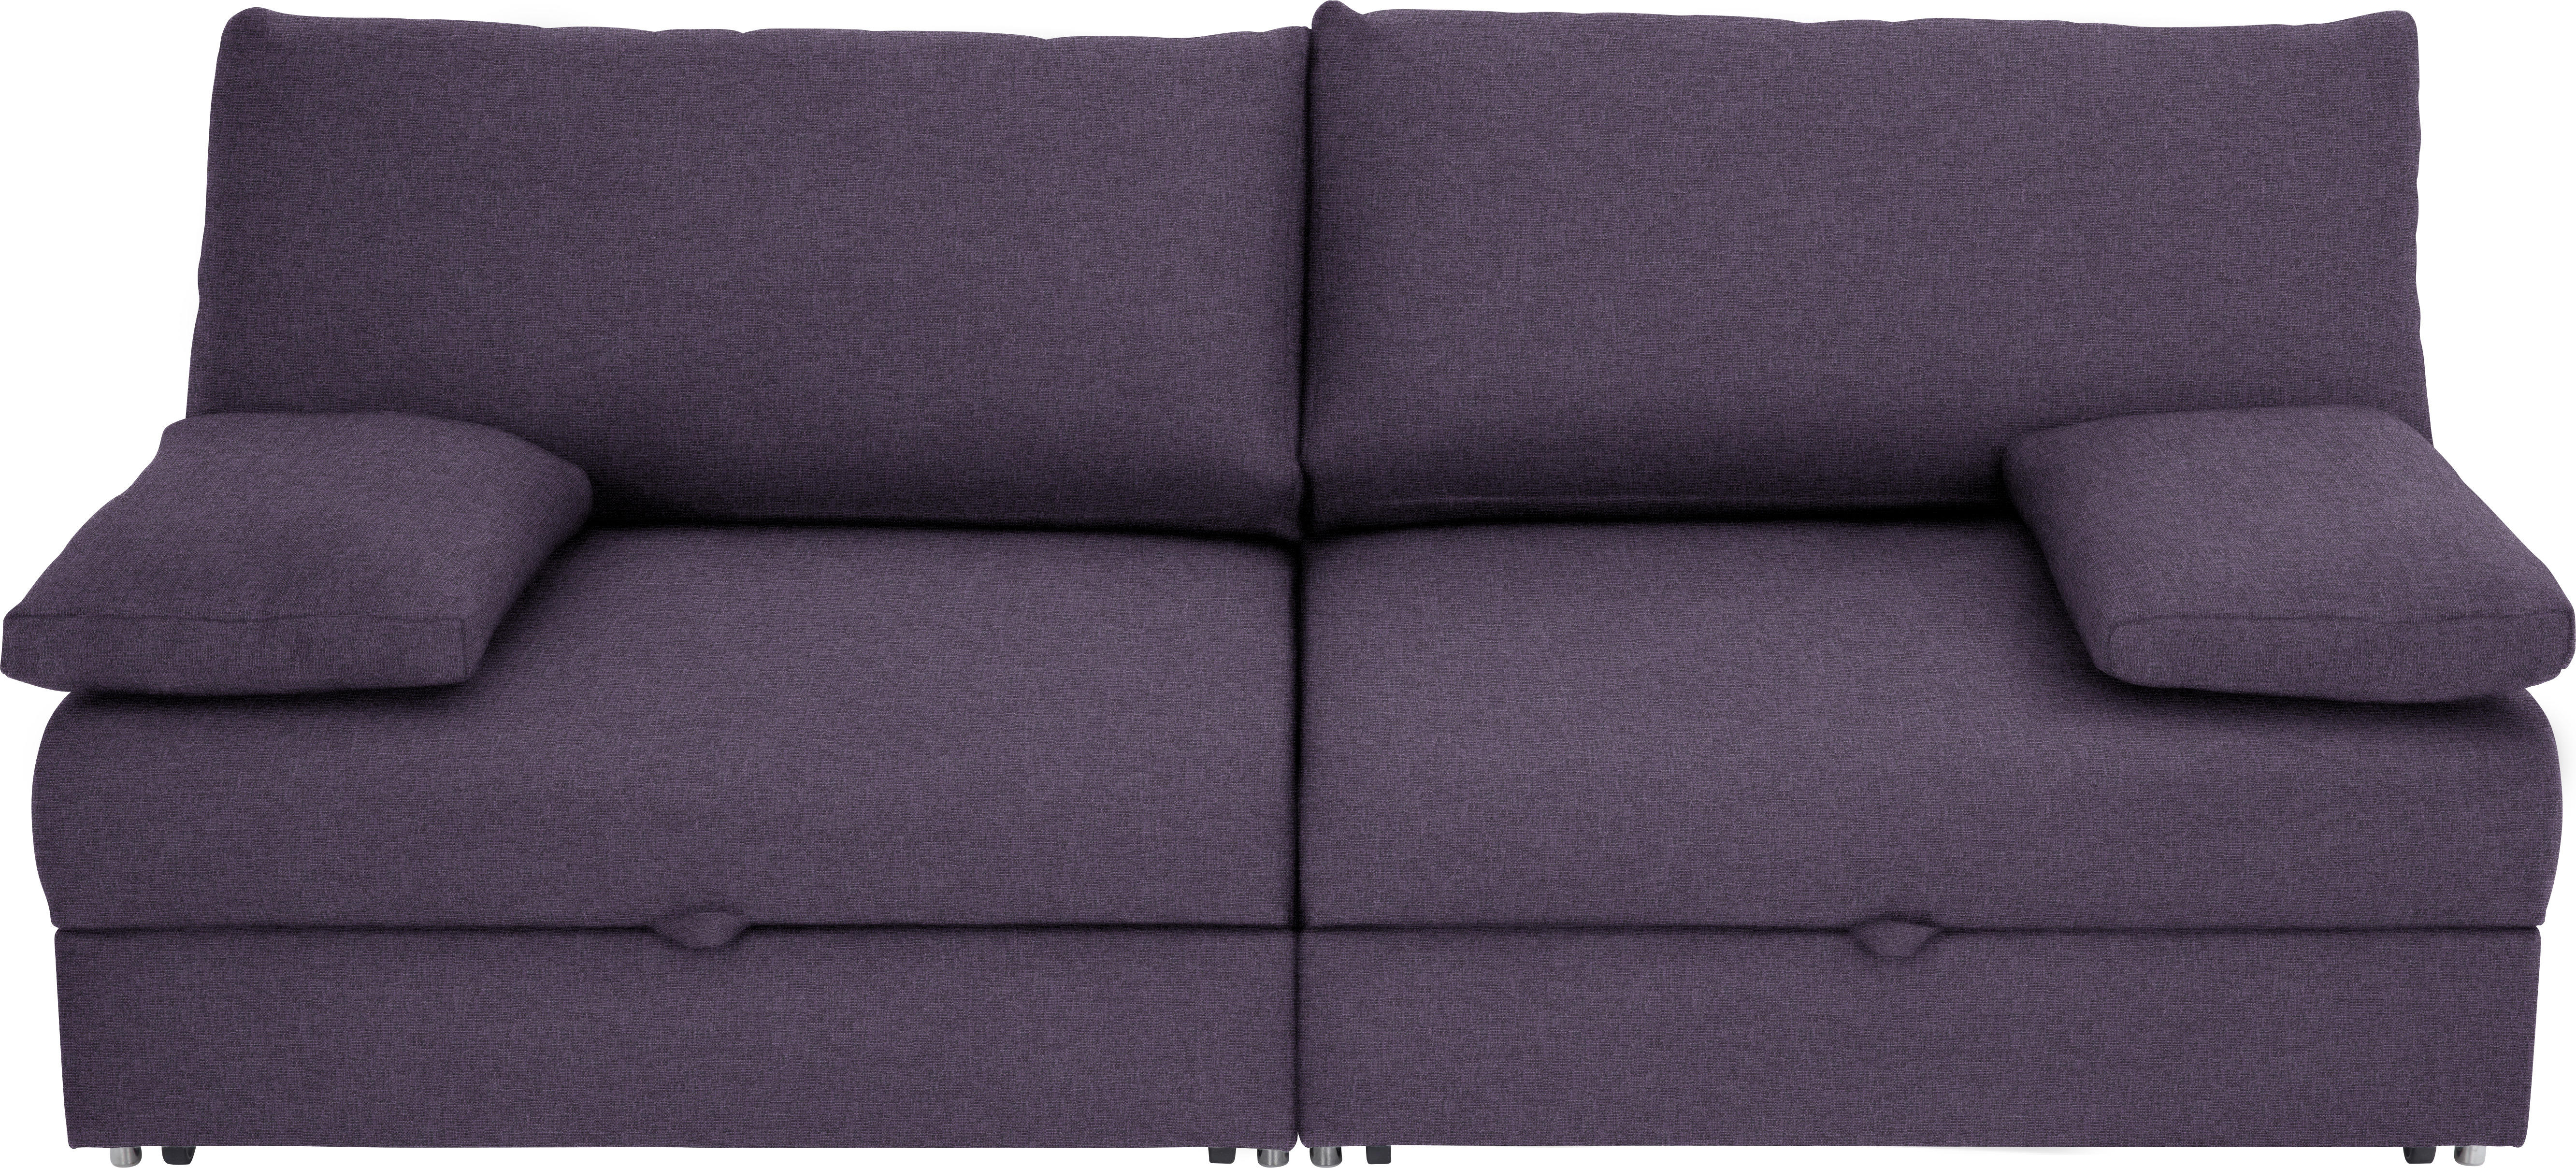 SCHLAFSOFA in Textil Violett  - Chromfarben/Violett, Design, Textil/Metall (192/77-88/110-120cm) - Bali